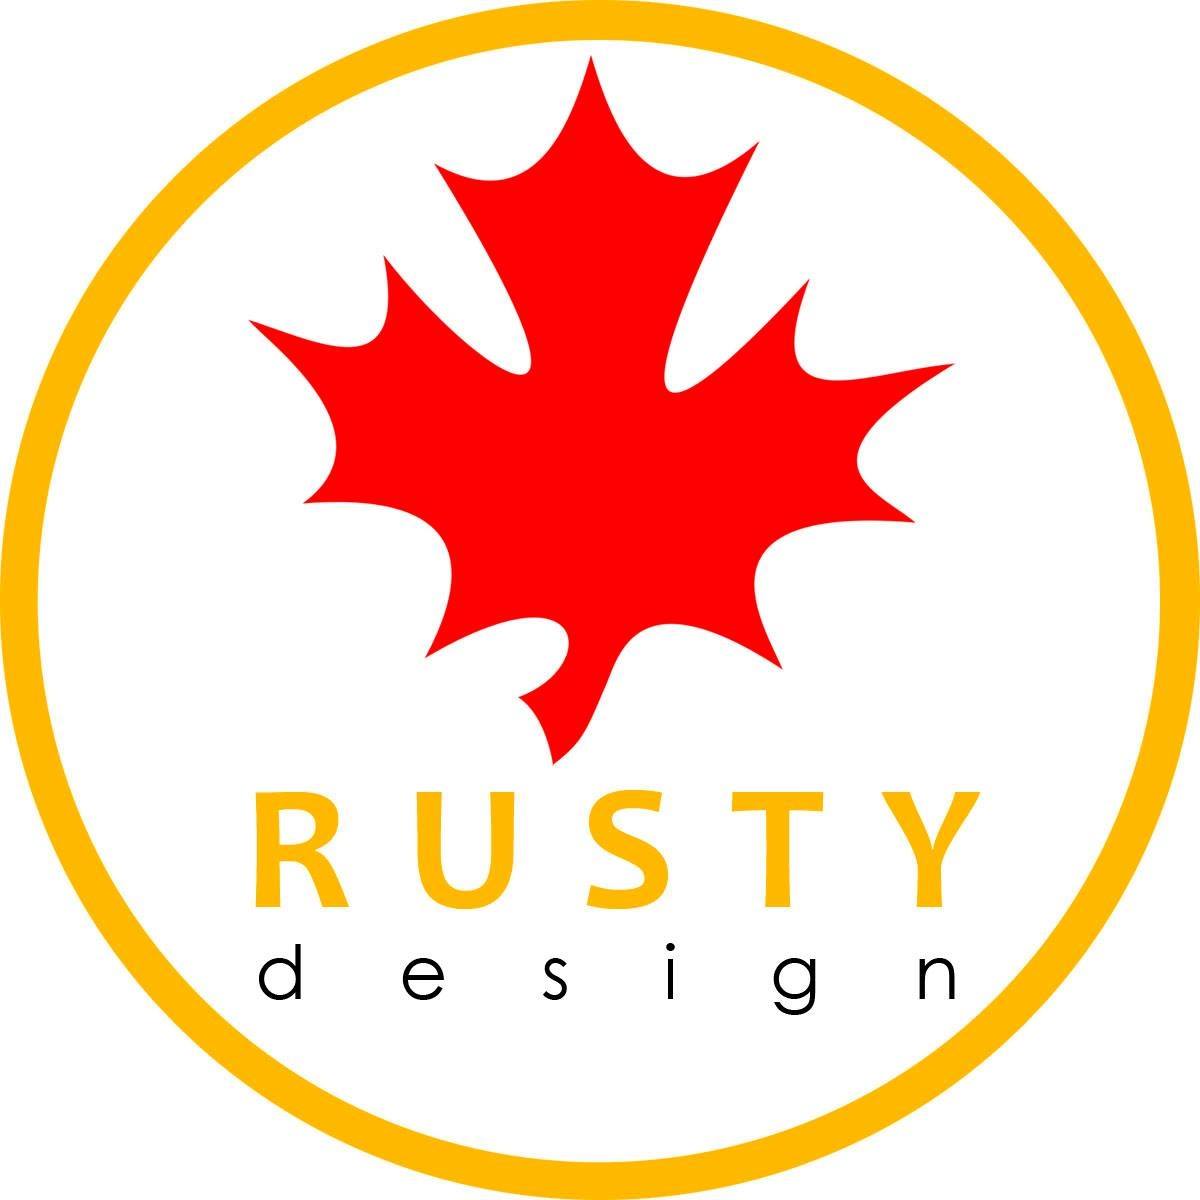 Rusty design